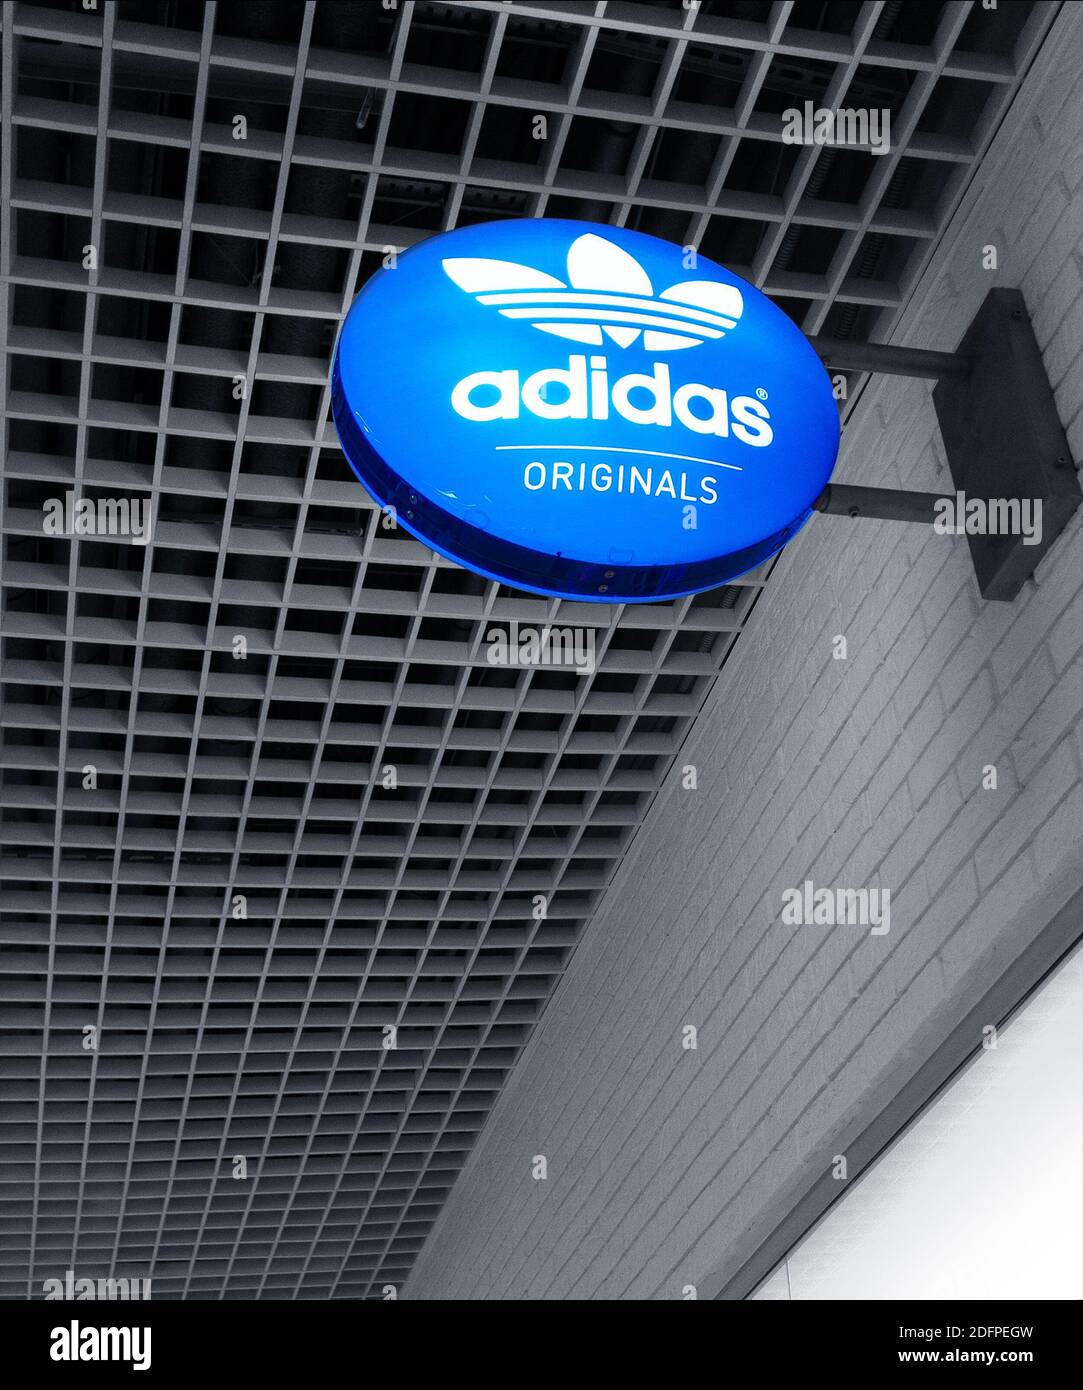 2020: sign the Adidas Originals Stock Photo - Alamy